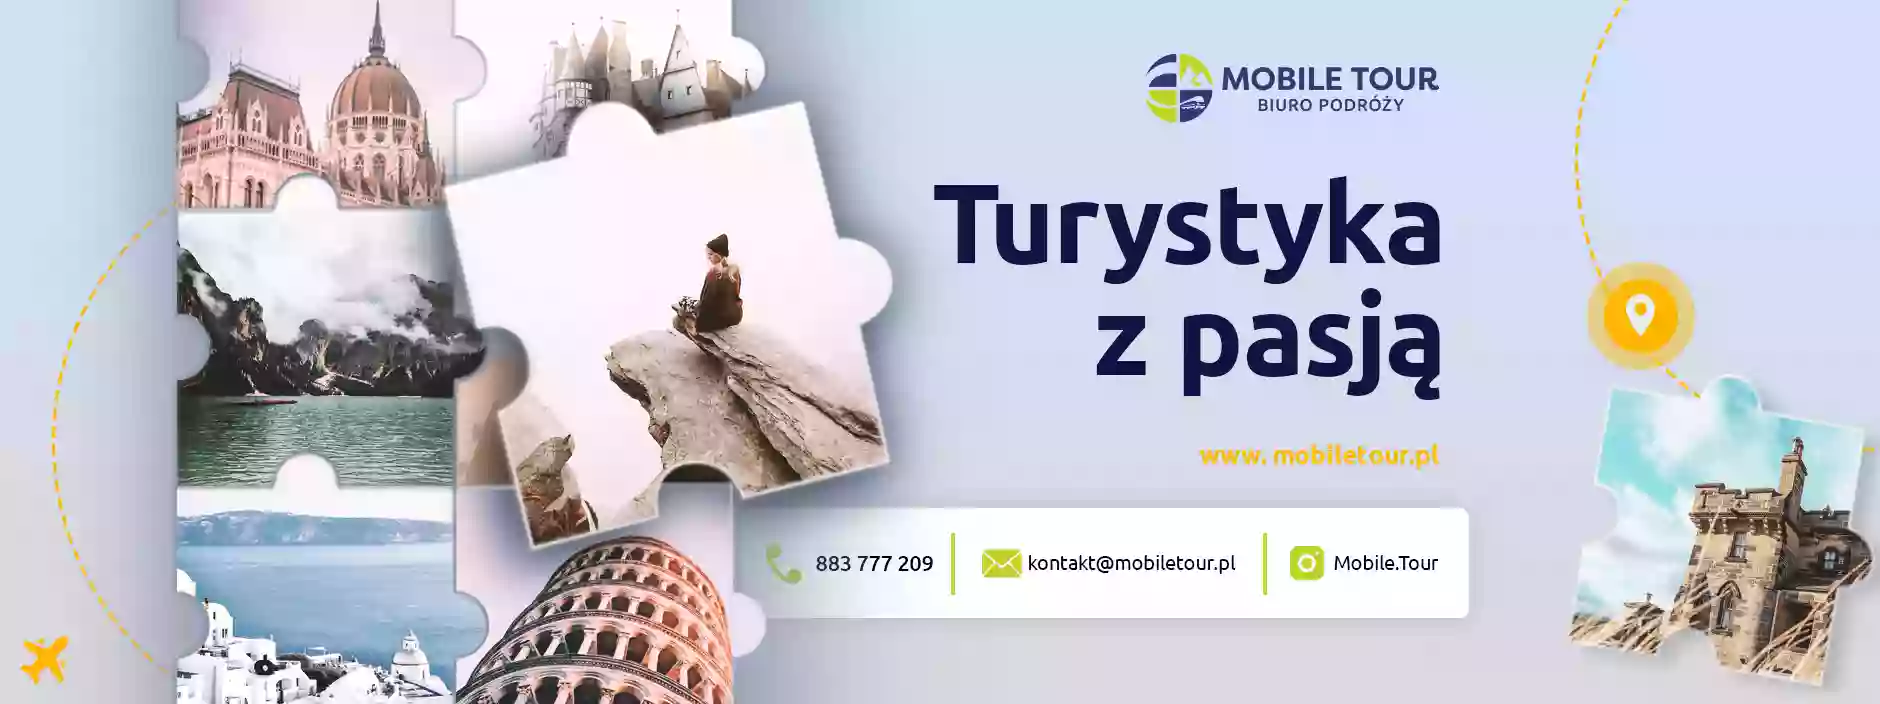 MOBILE TOUR - Twoje Mobilne Biuro Podróży